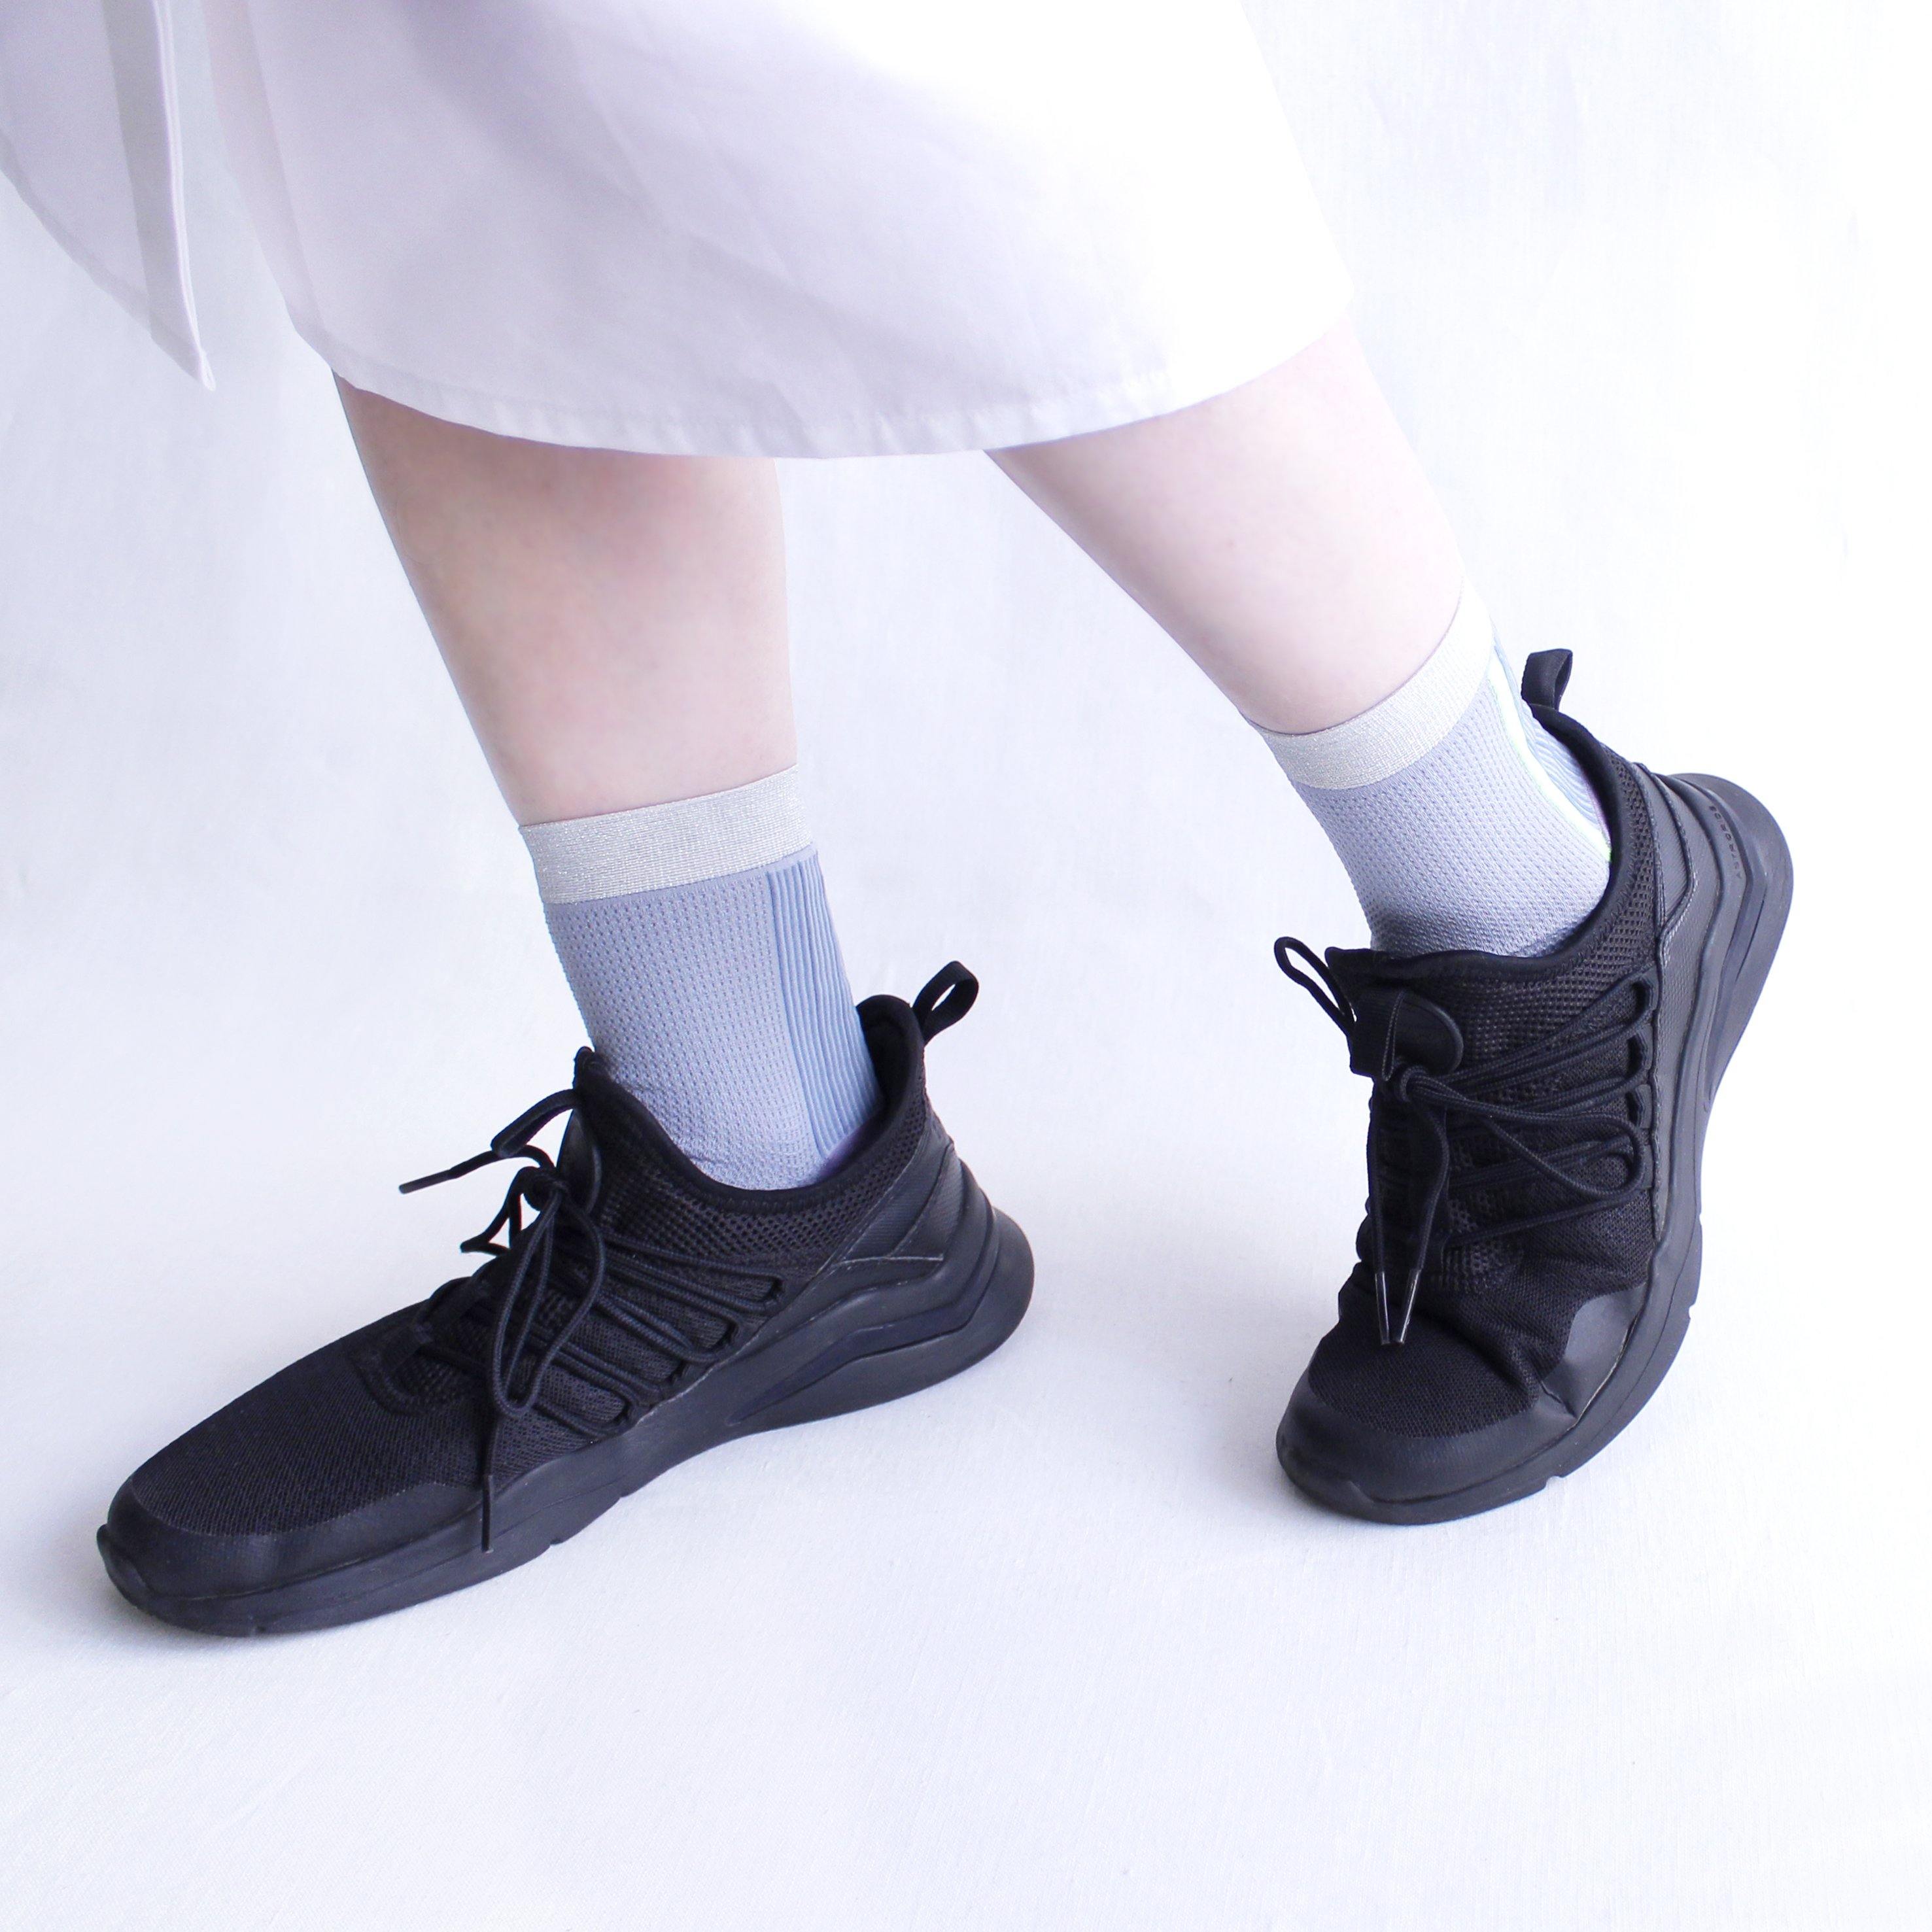 COQ Textile - Leaf line socks - MMW Concept